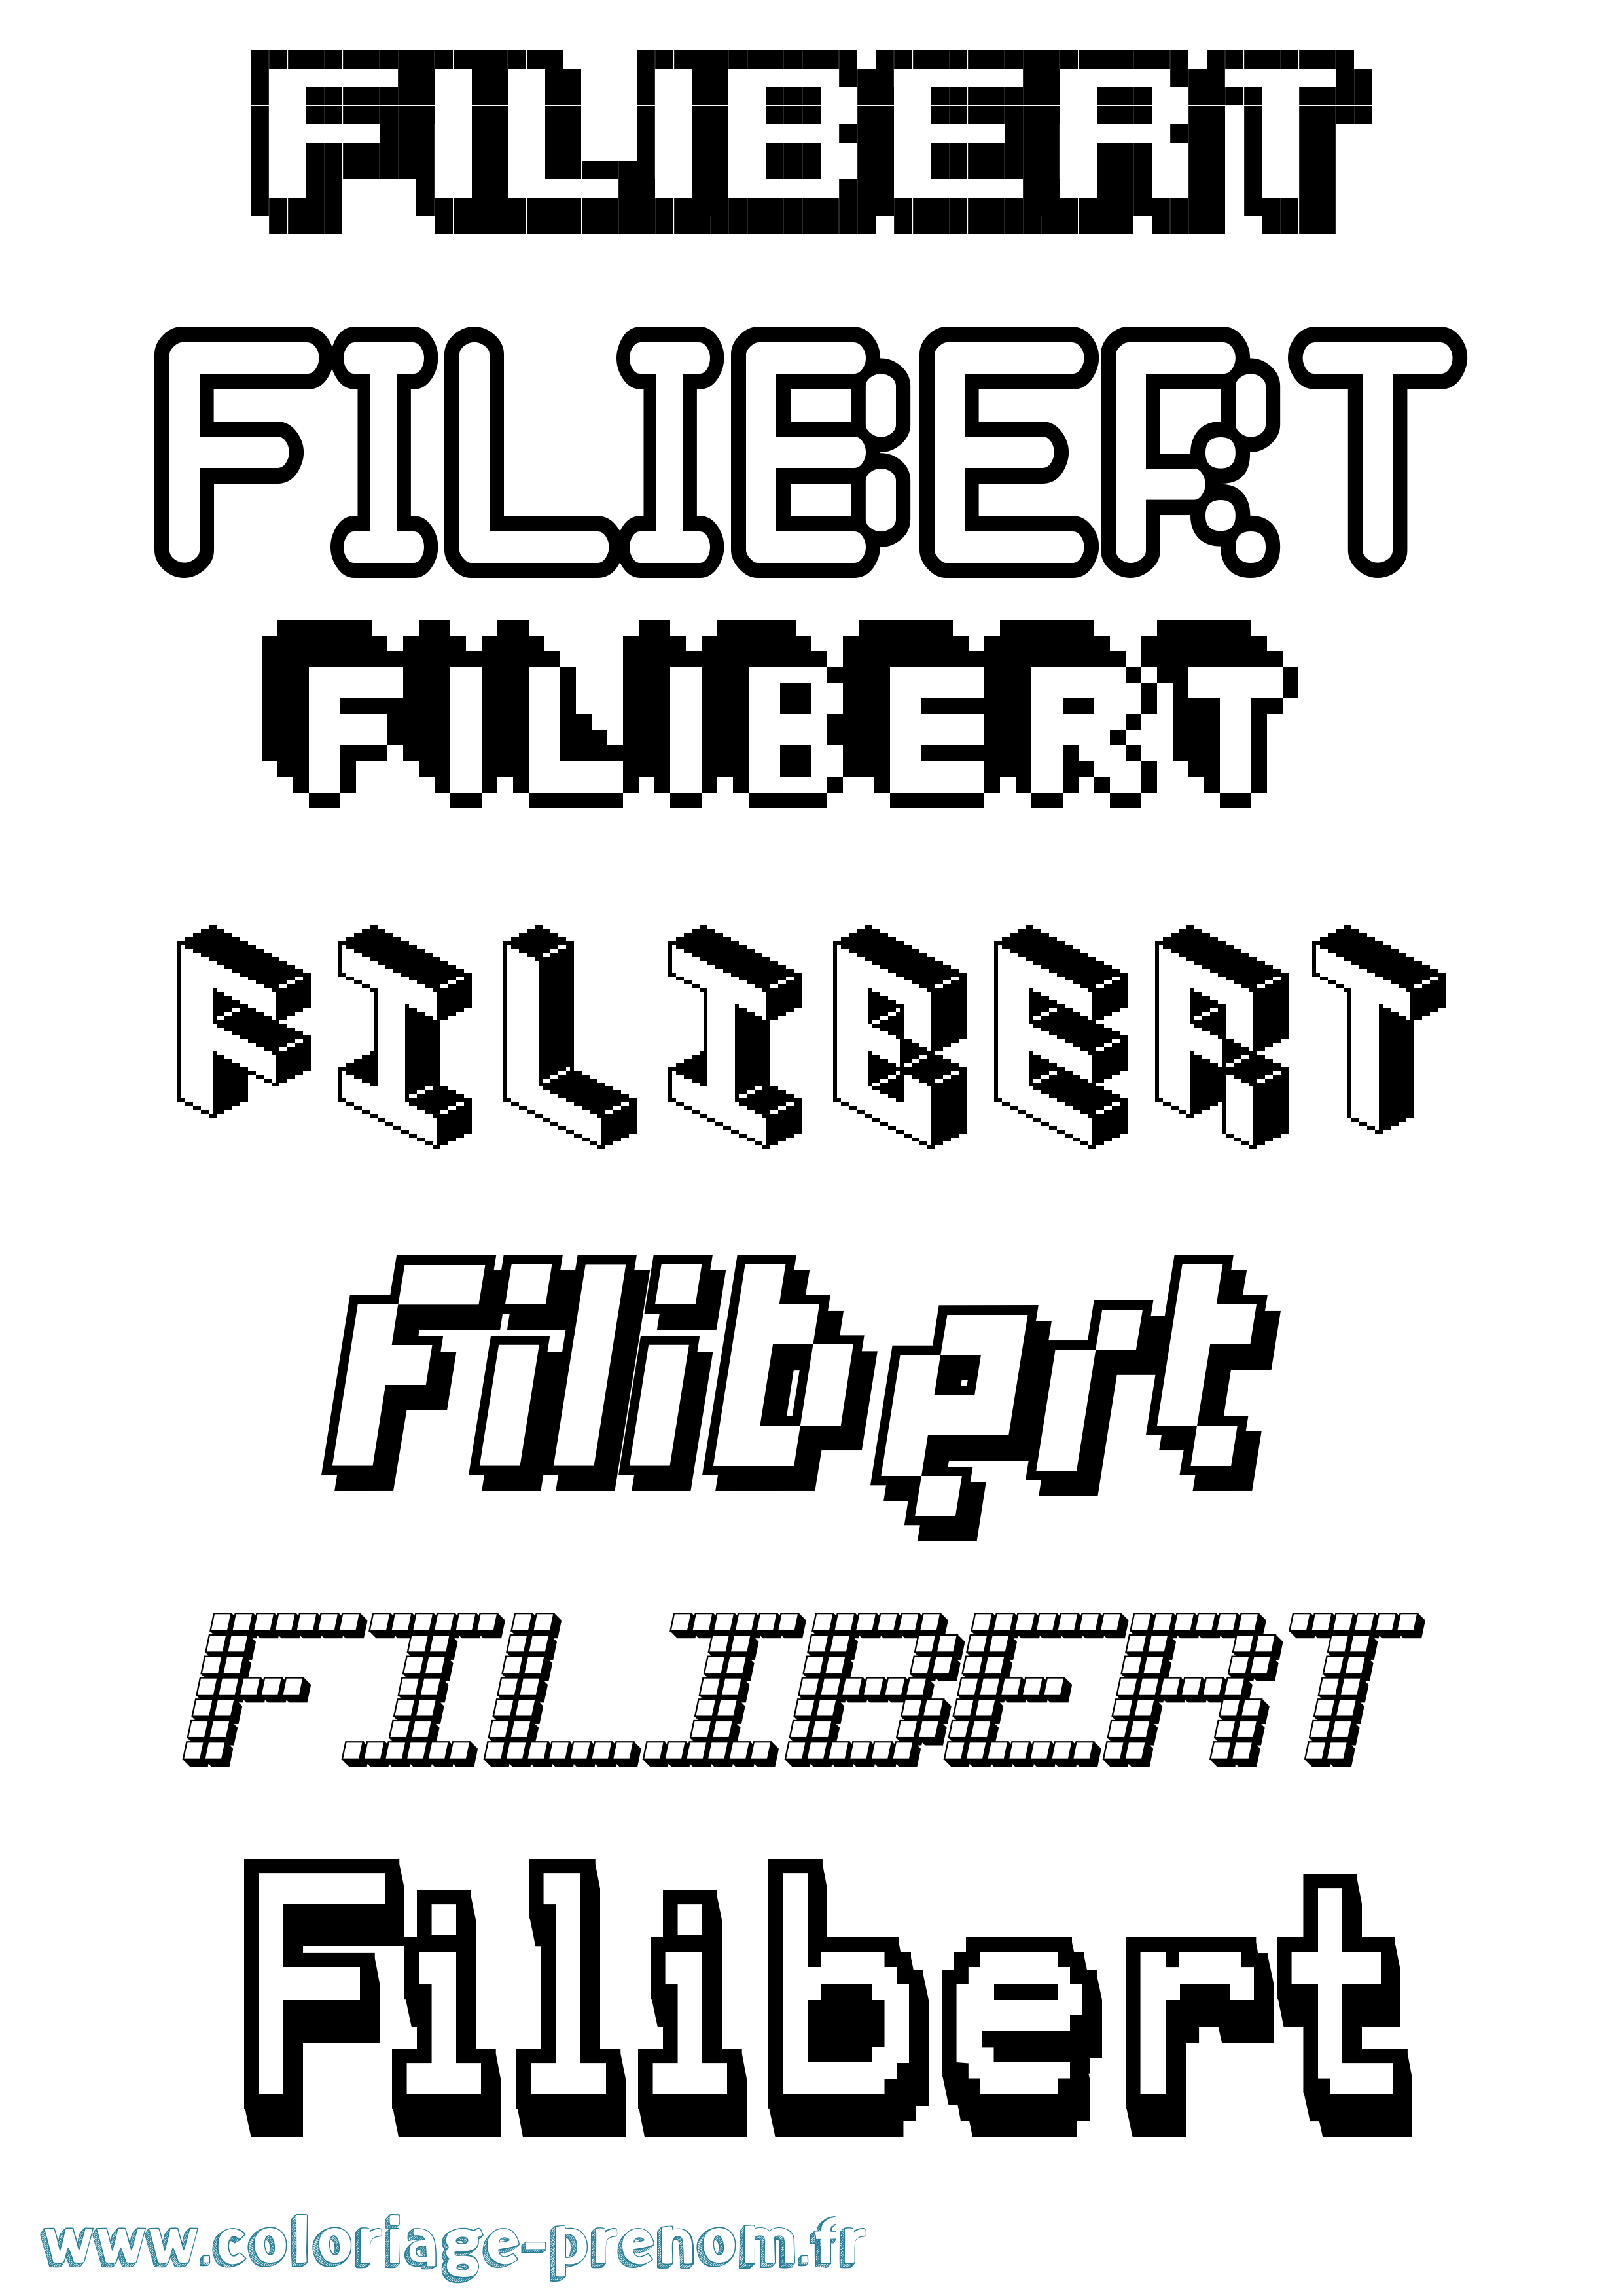 Coloriage prénom Filibert Pixel